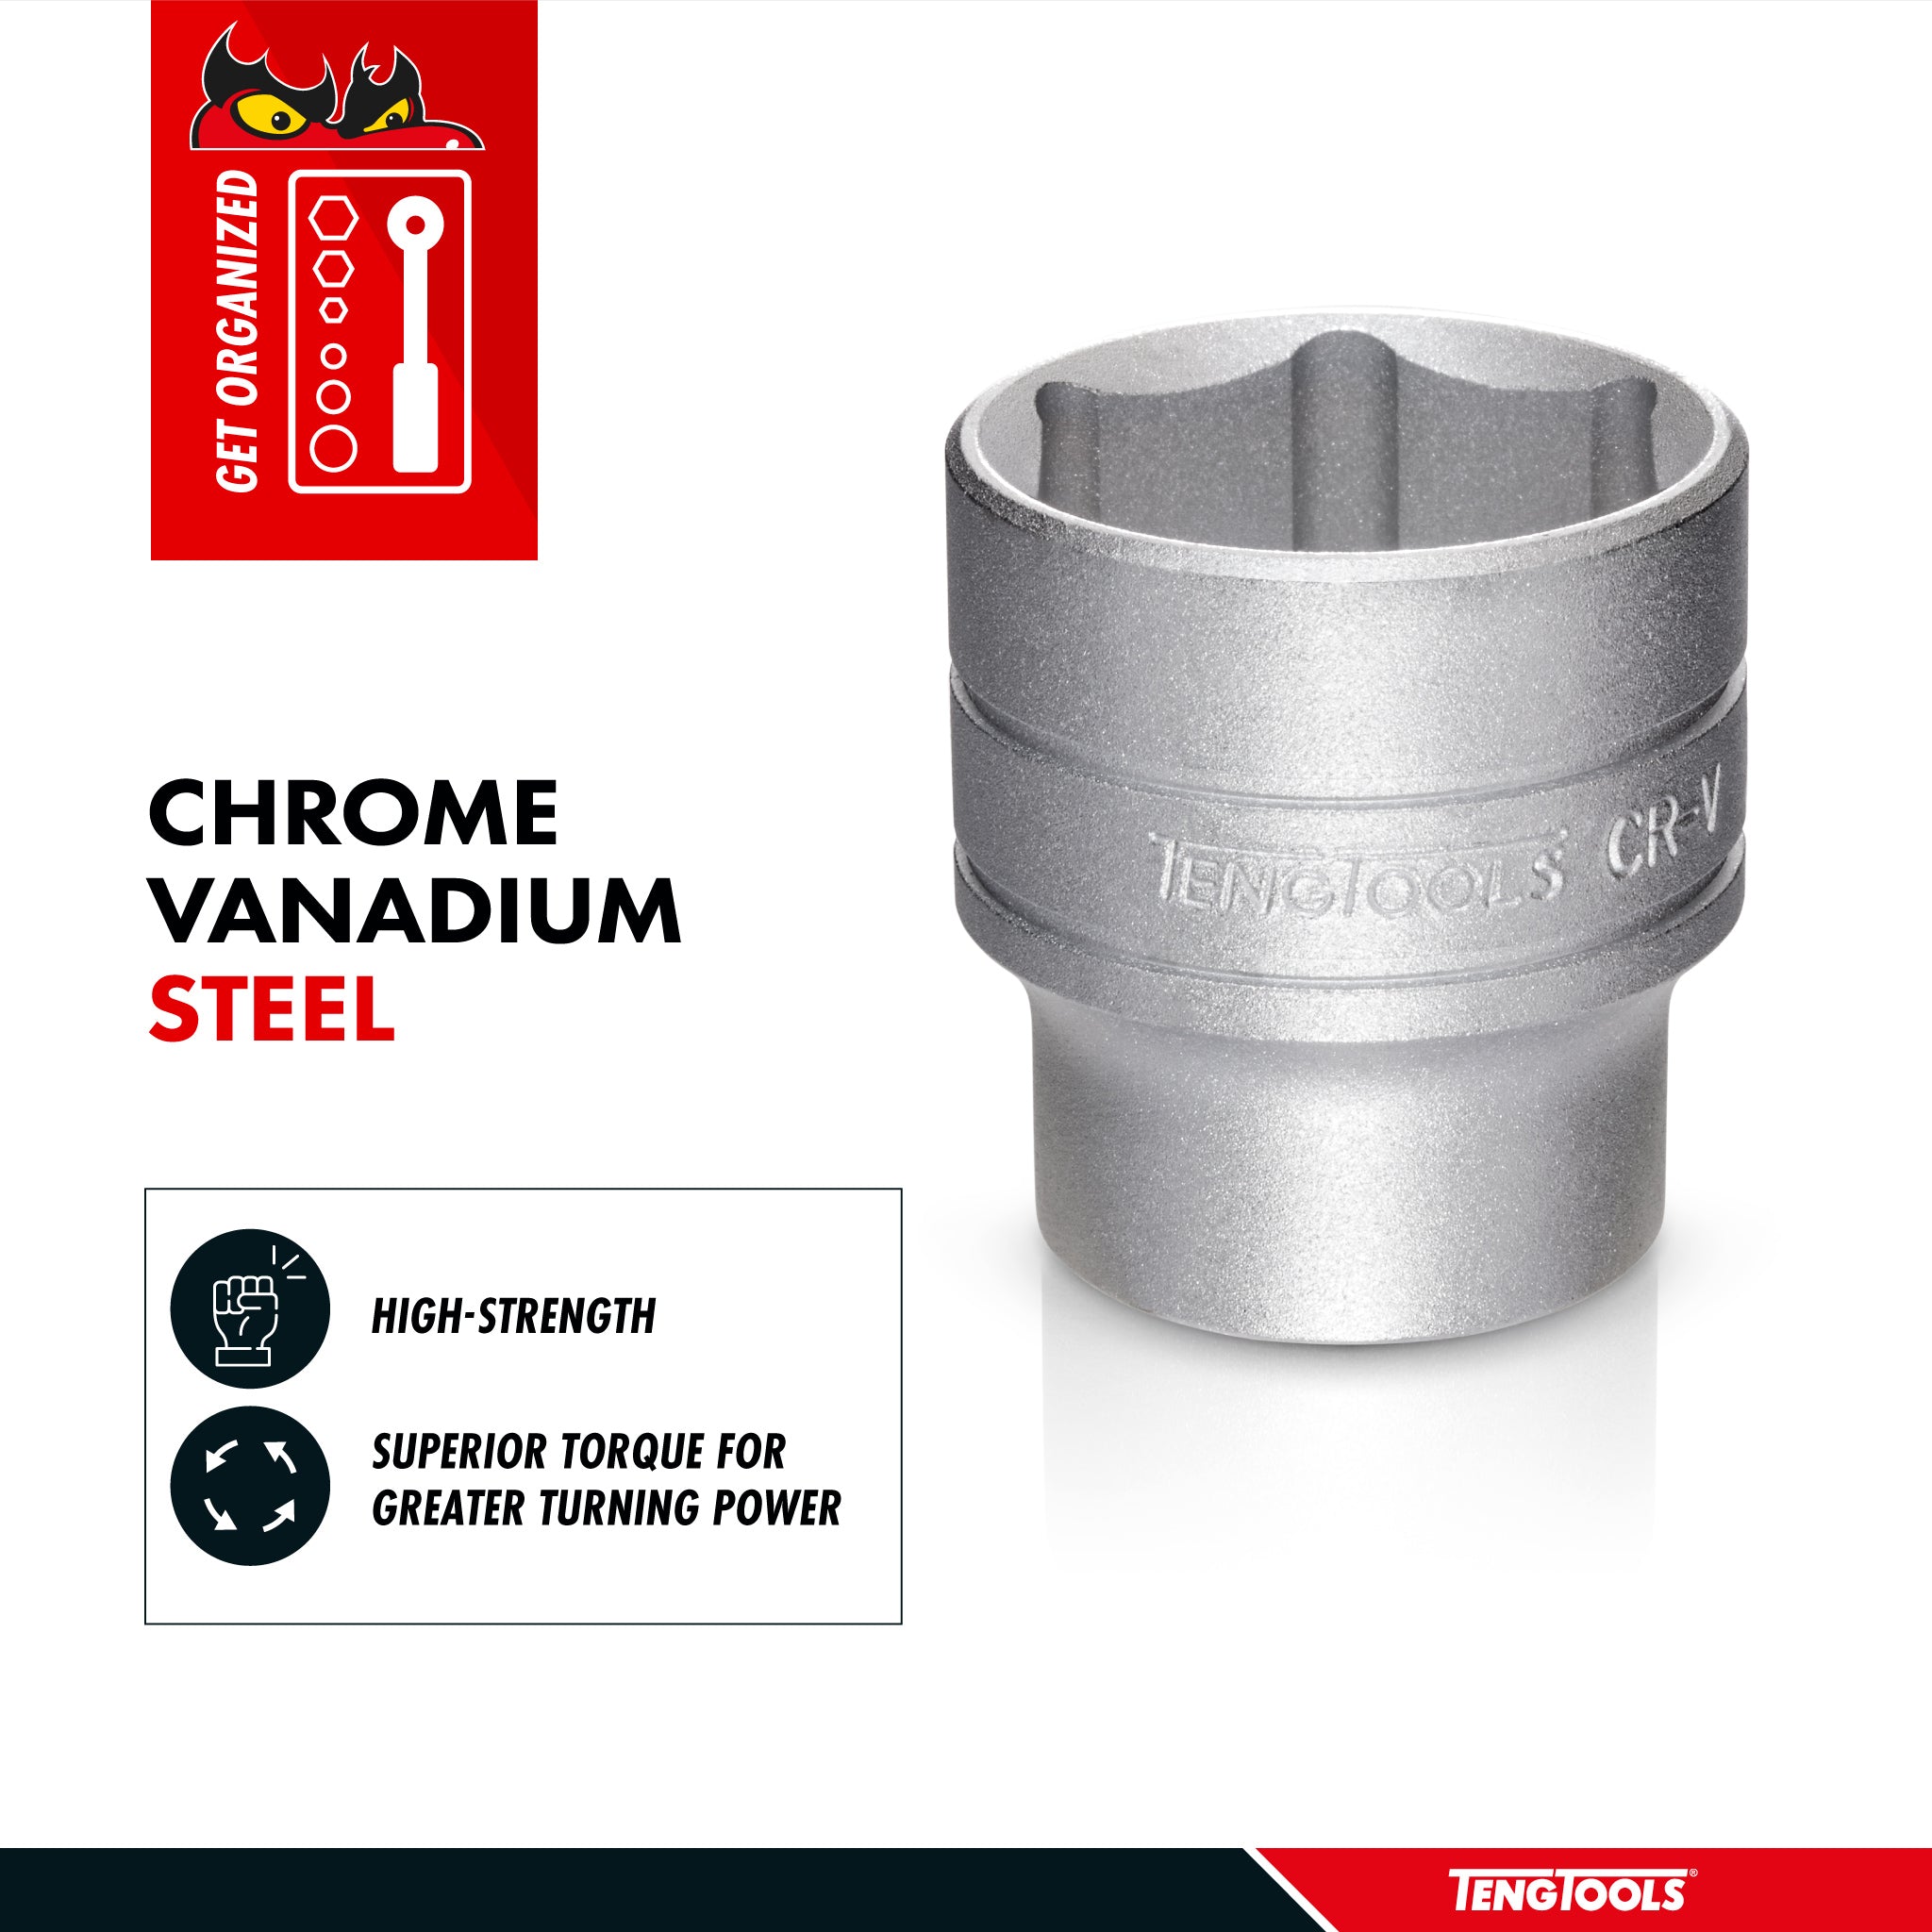 Teng Tools 1/4 Inch Drive 6 Point SAE Shallow Chrome Vanadium Sockets - 11/32